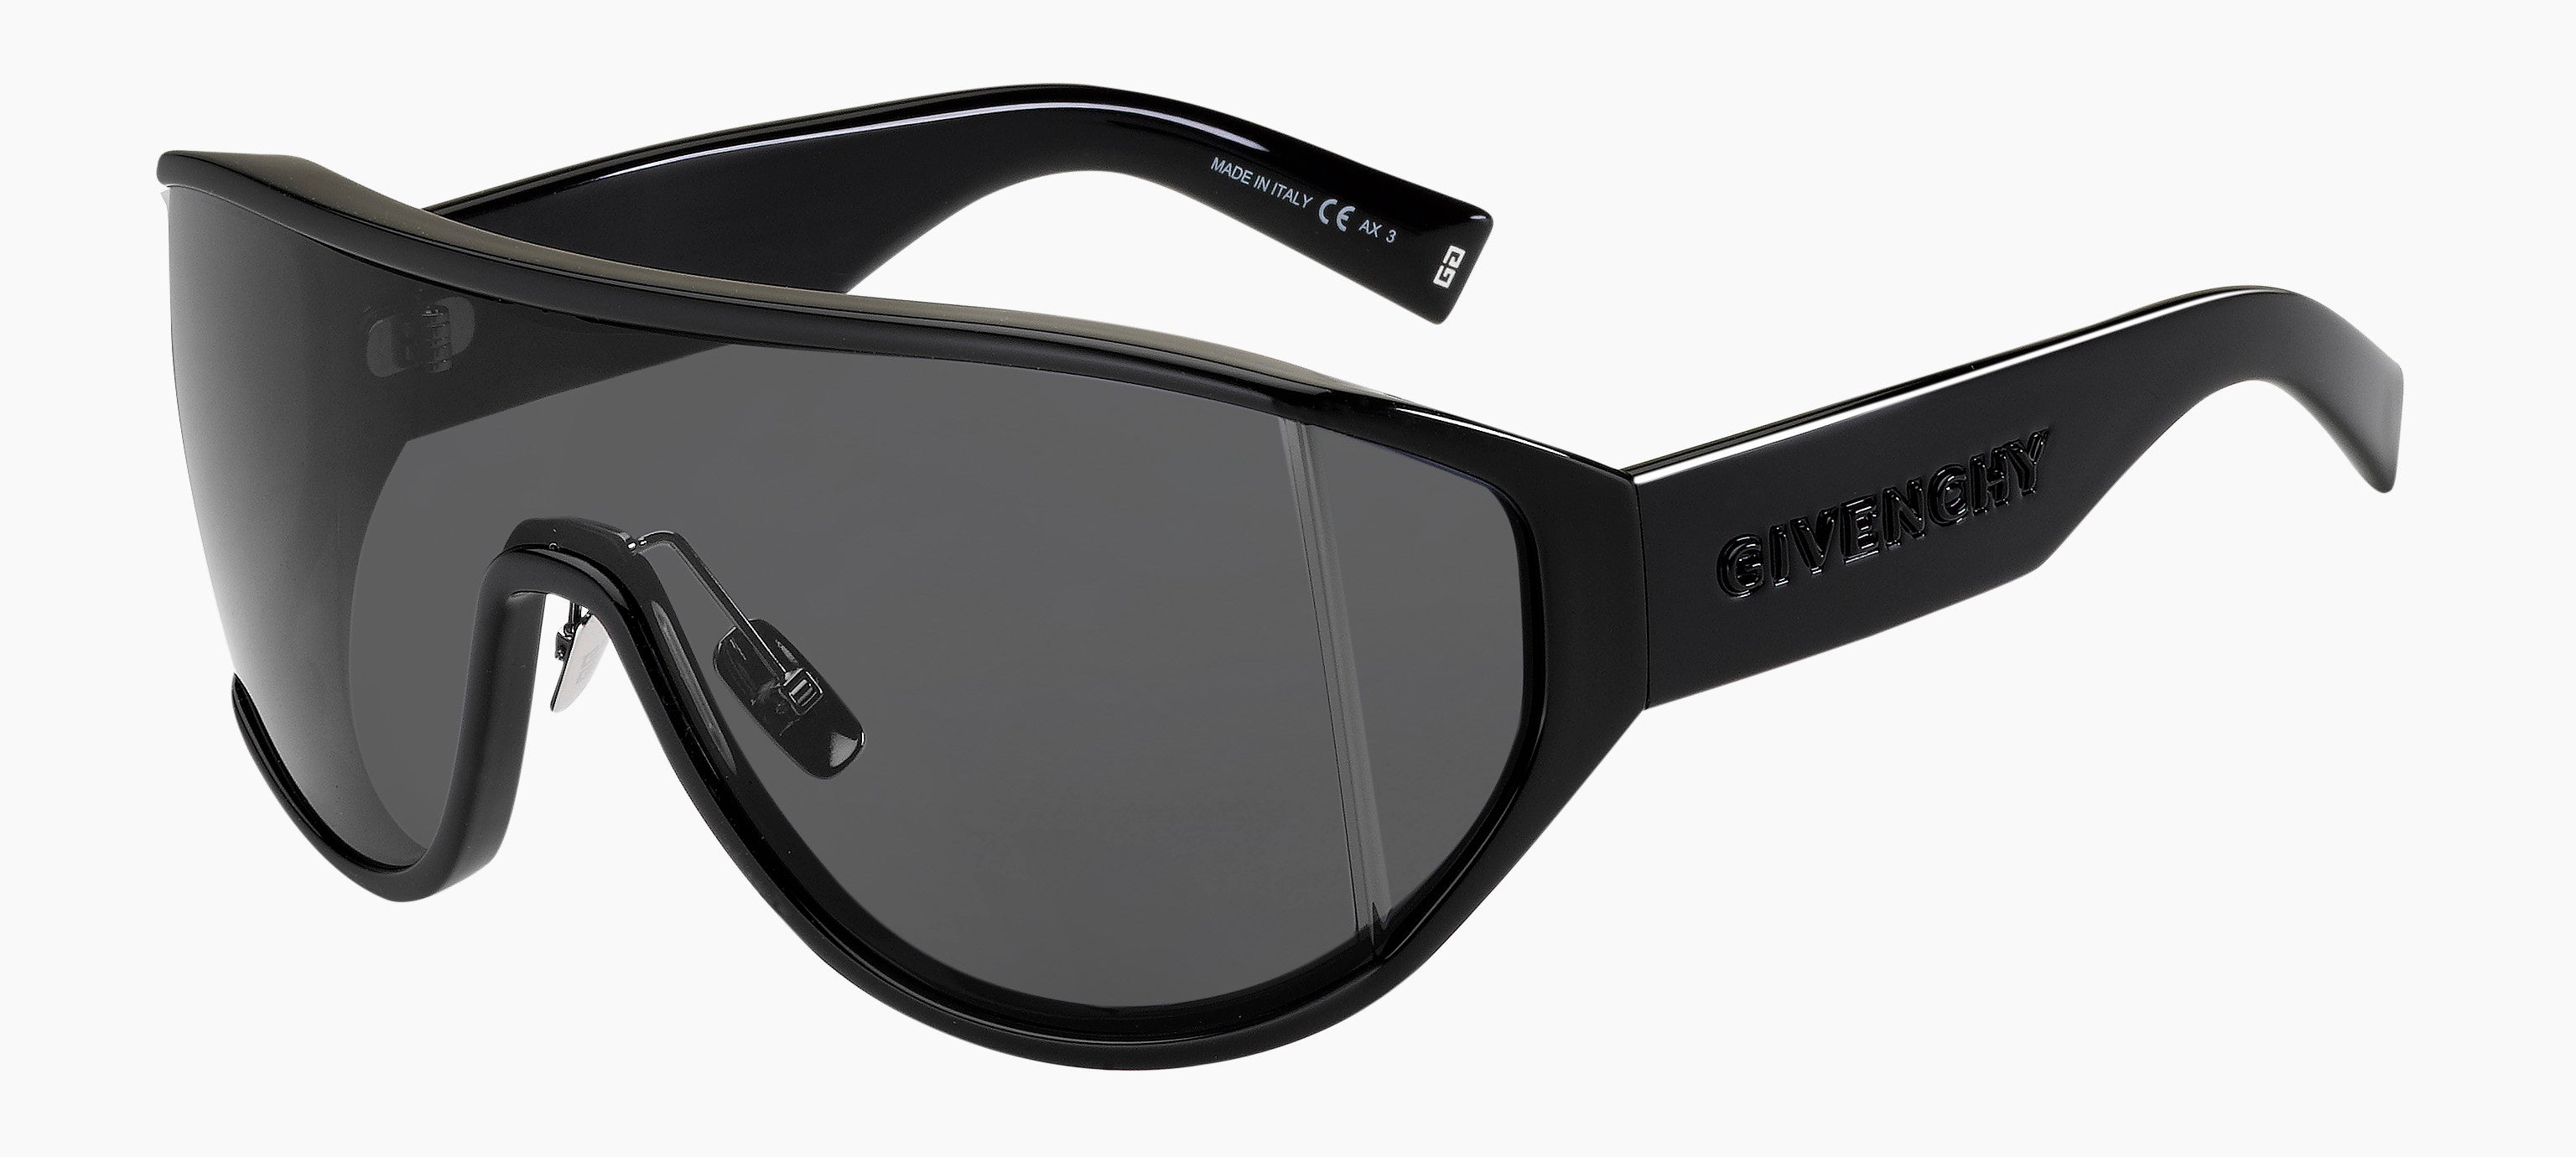  Givenchy 7188/S Rectangular Sunglasses 0807-0807  Black (IR Gray)